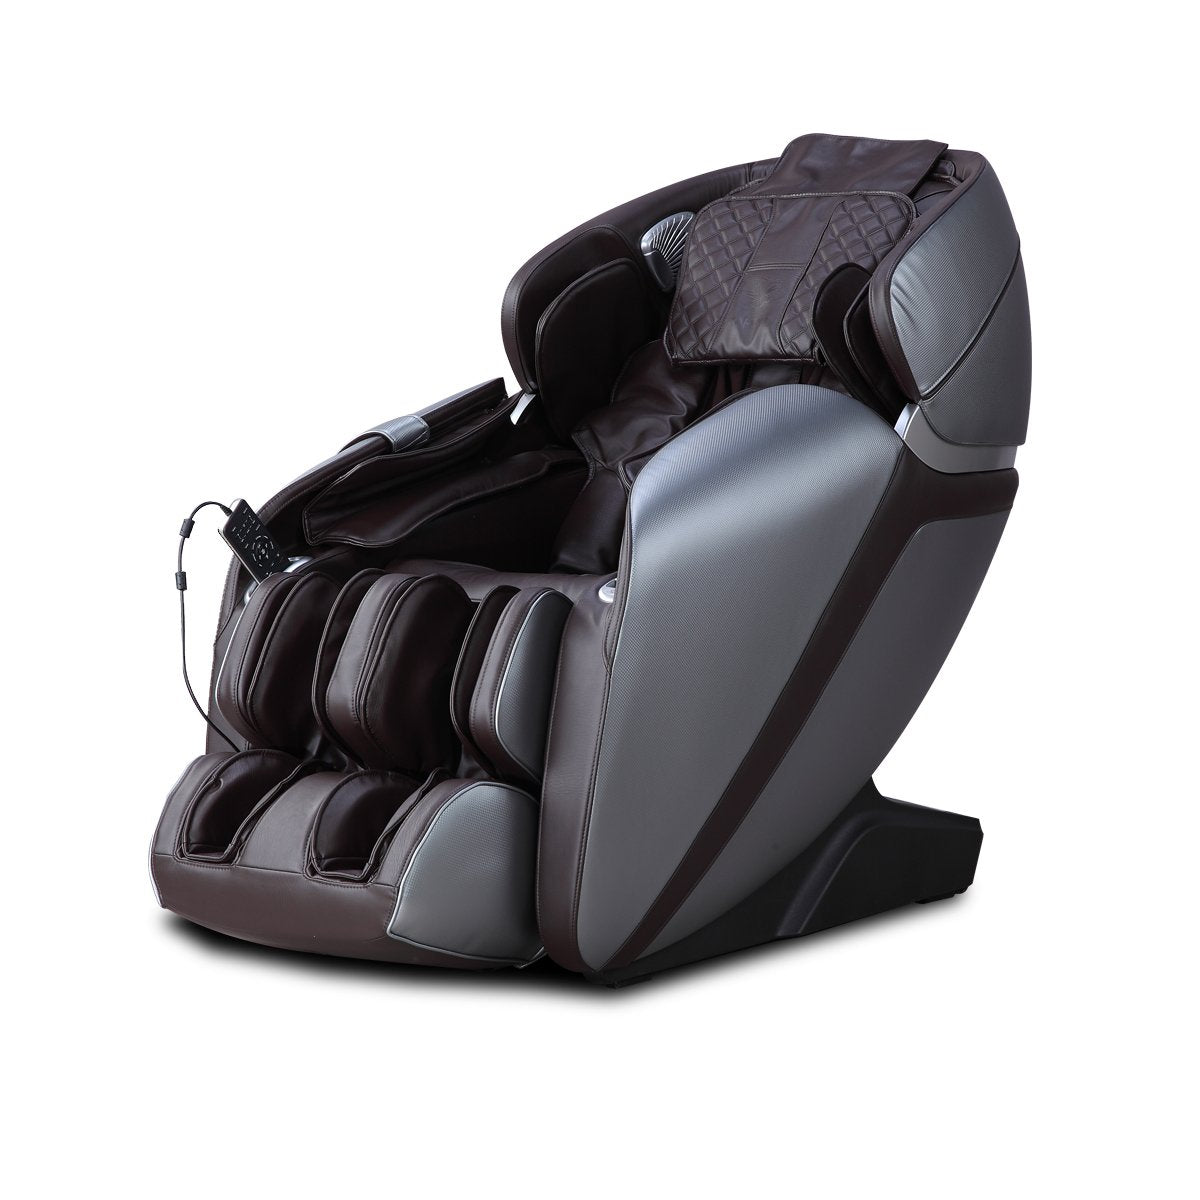 Kahuna LM7000 massage chair brown